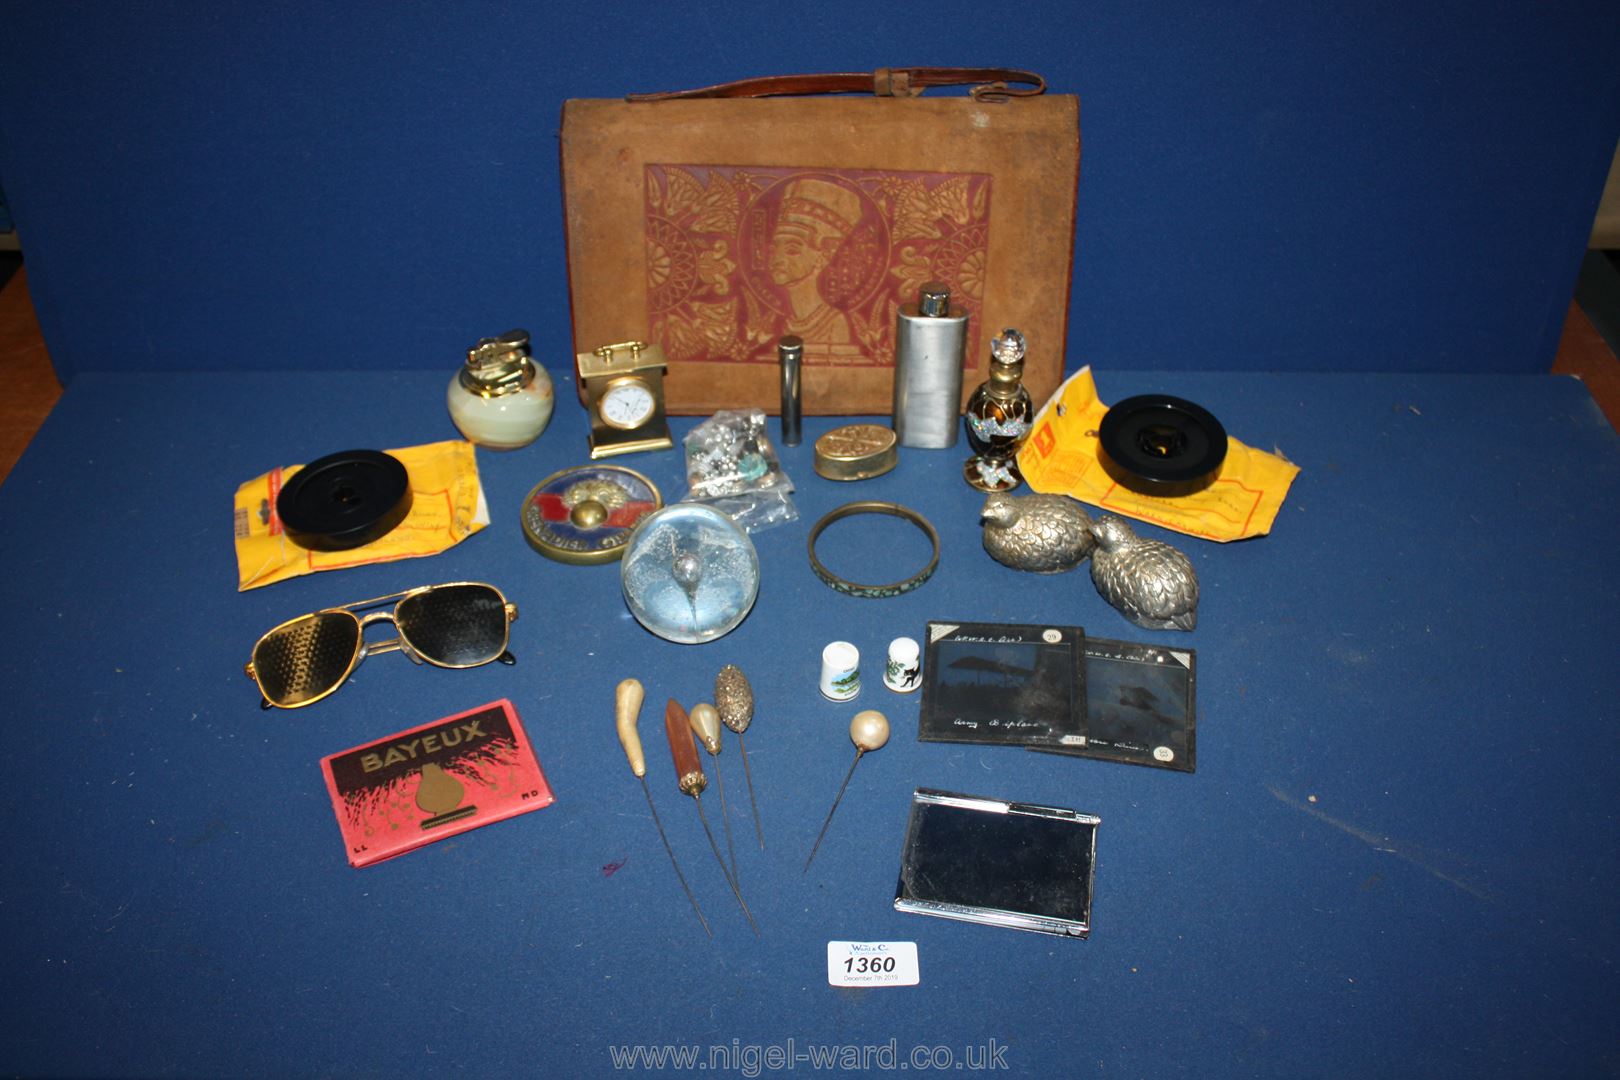 A box of miscellanea including a leather document holder, mini clock, films, lighter, etc.